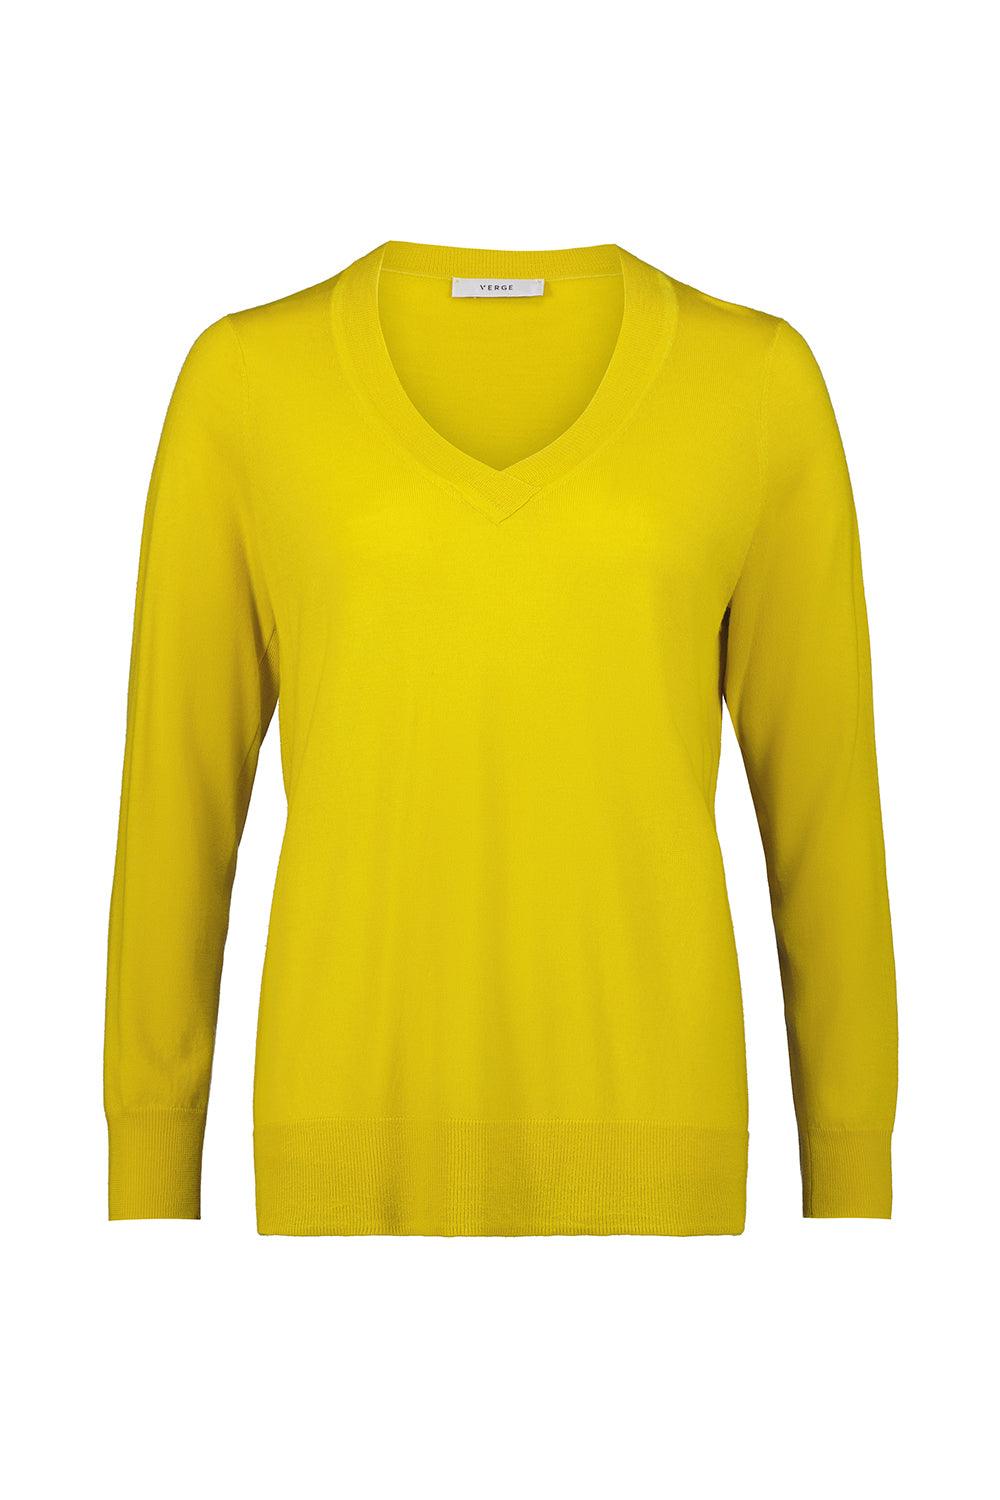 Network Sweater - Sunshine - Sweater VERGE